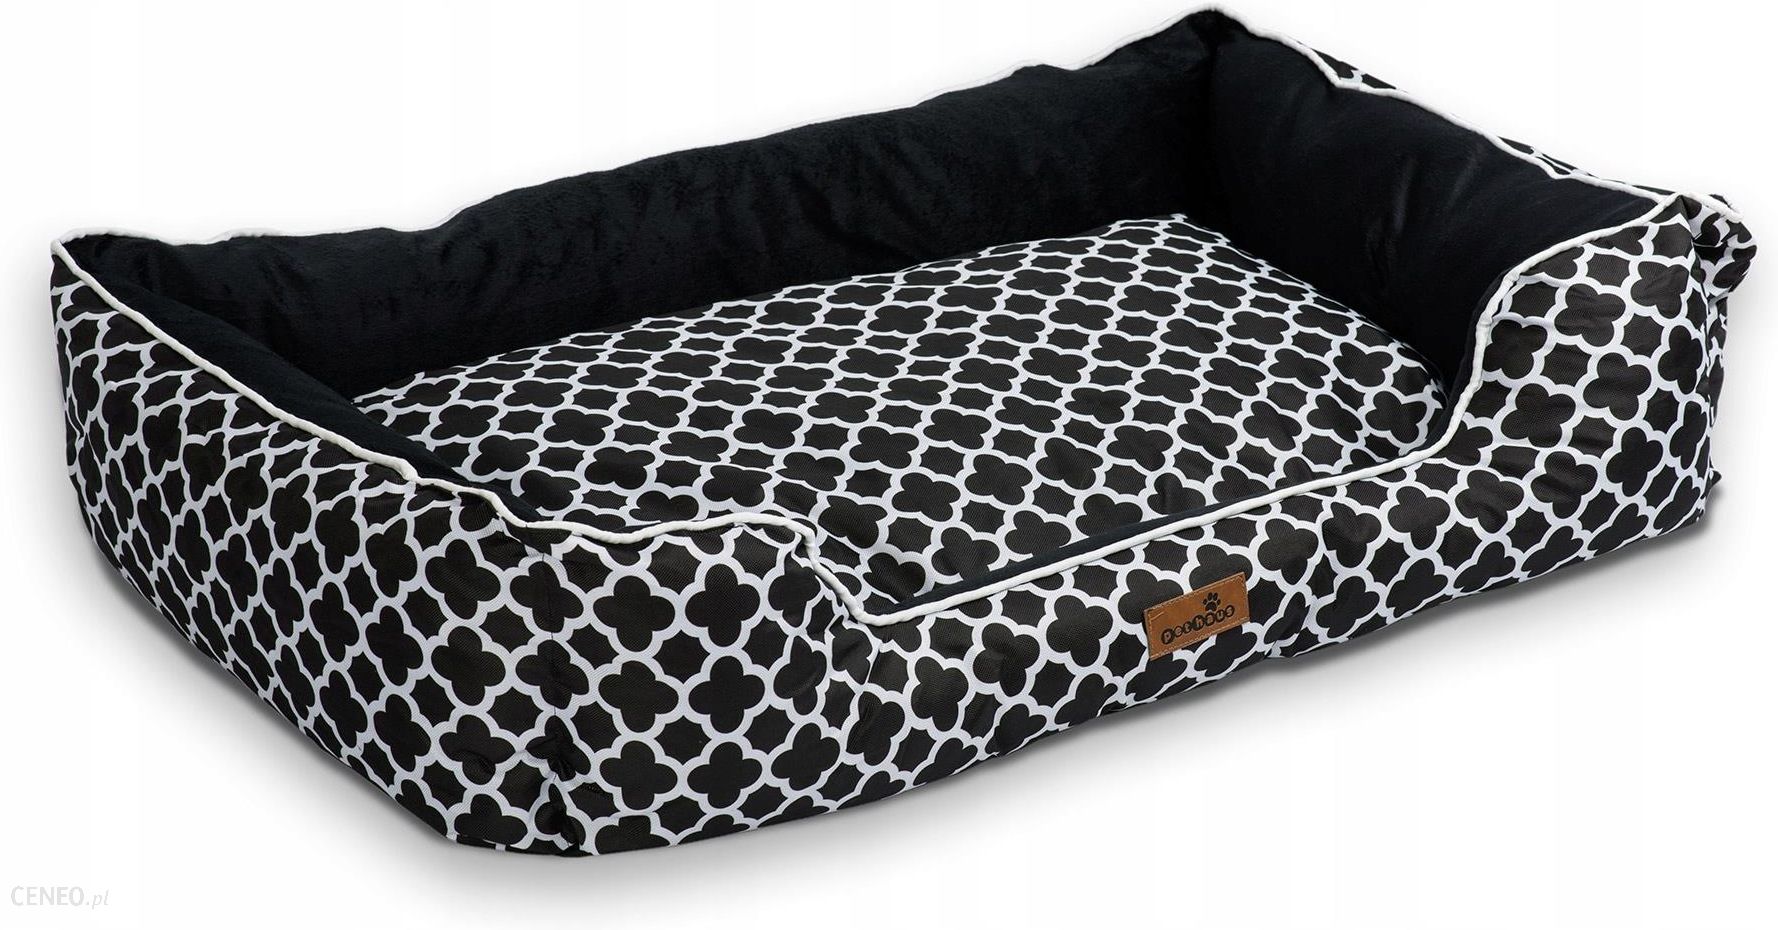   Katės šuns lovos atlošas 100x70cm XL dydis